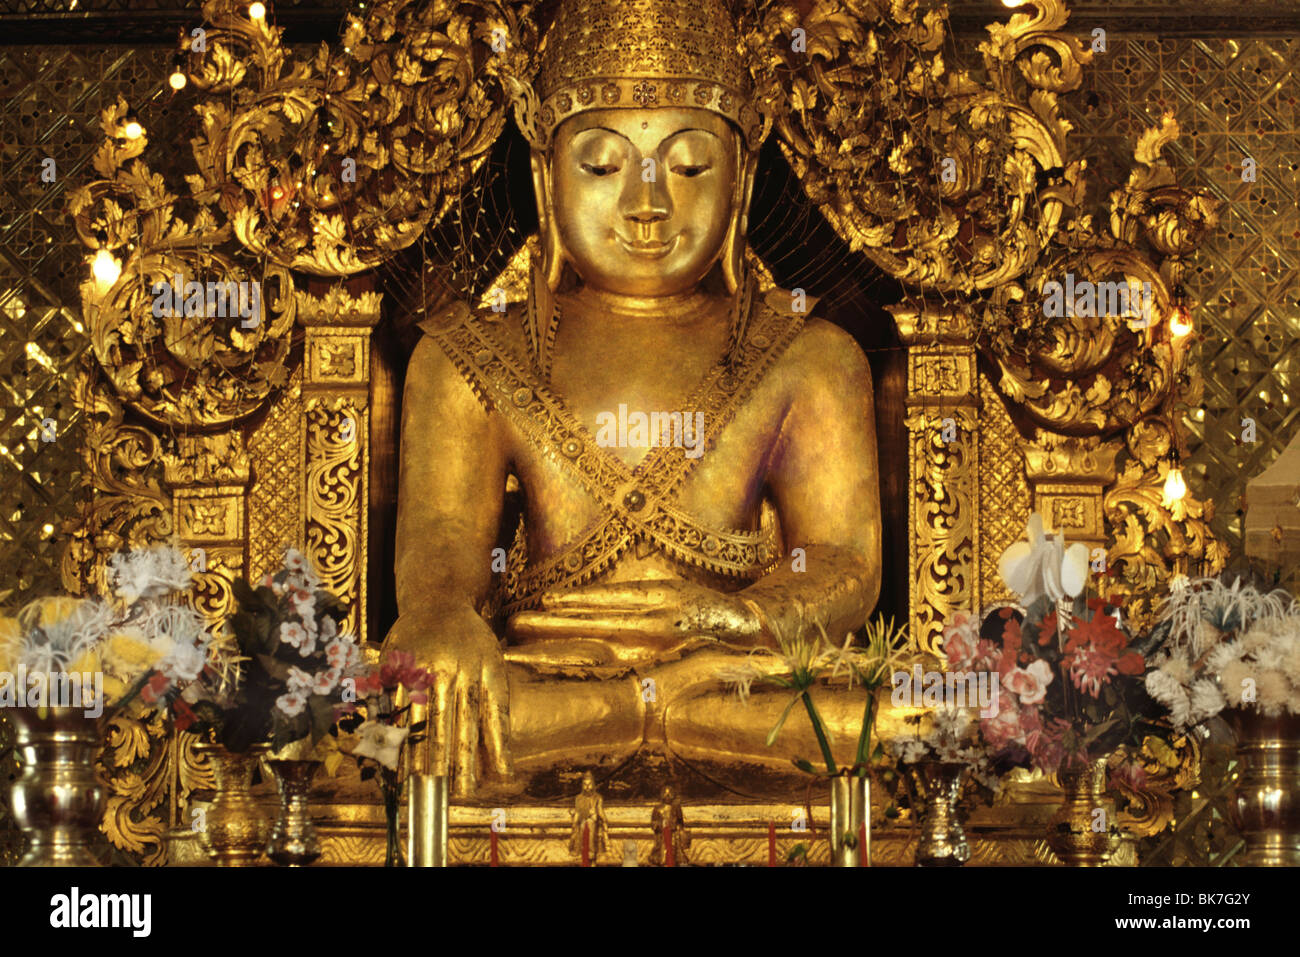 The main Buddha Image in the Sandamuni Pagoda, Mandalay, Myanmar (Burma), Asia Stock Photo